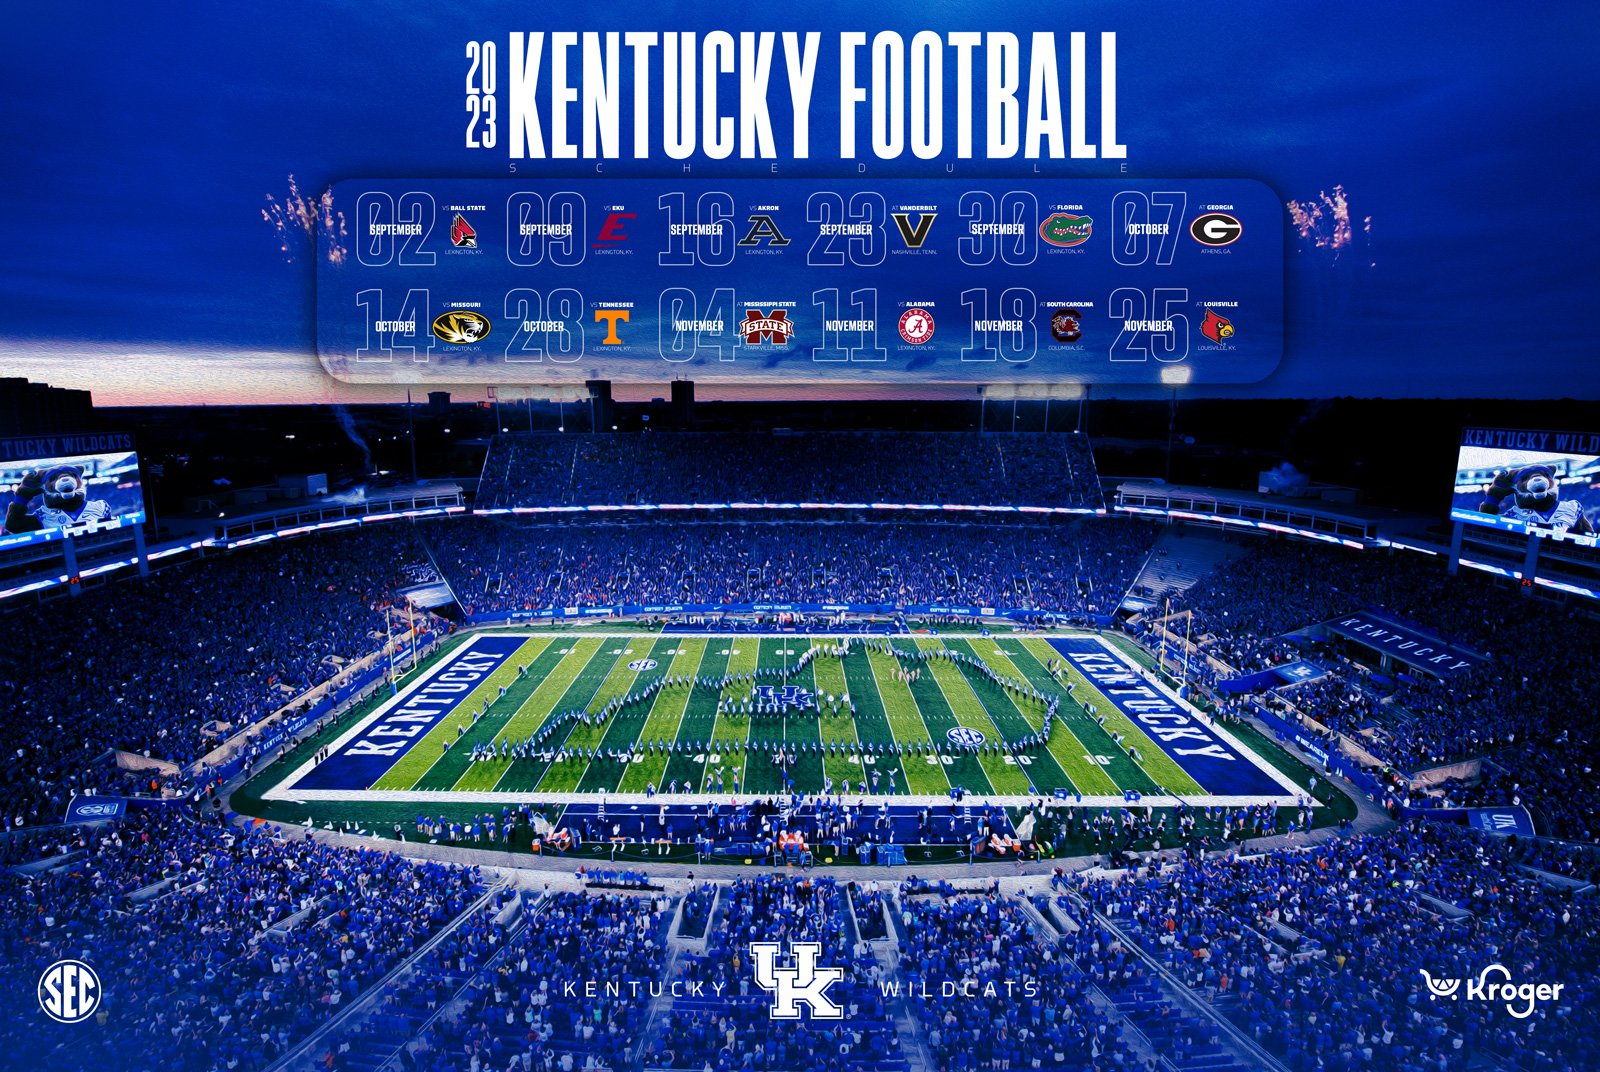 2023 Kentucky football schedule poster unveiled